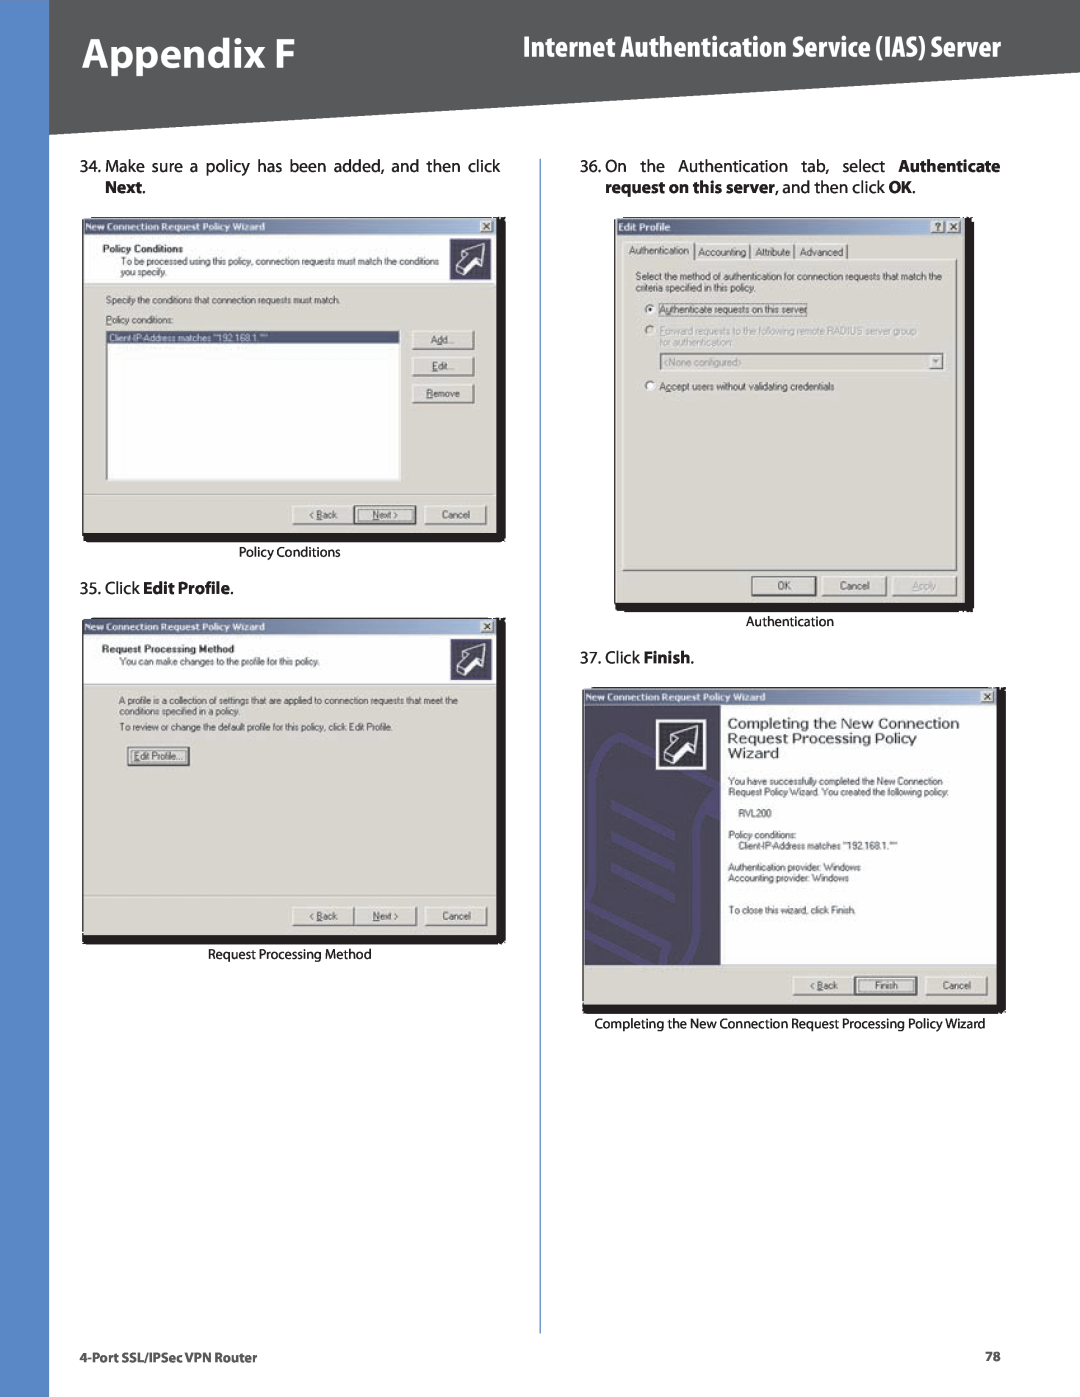 Cisco Systems RVL200 manual Click Edit Profile, Appendix F, Internet Authentication Service IAS Server, Policy Conditions 